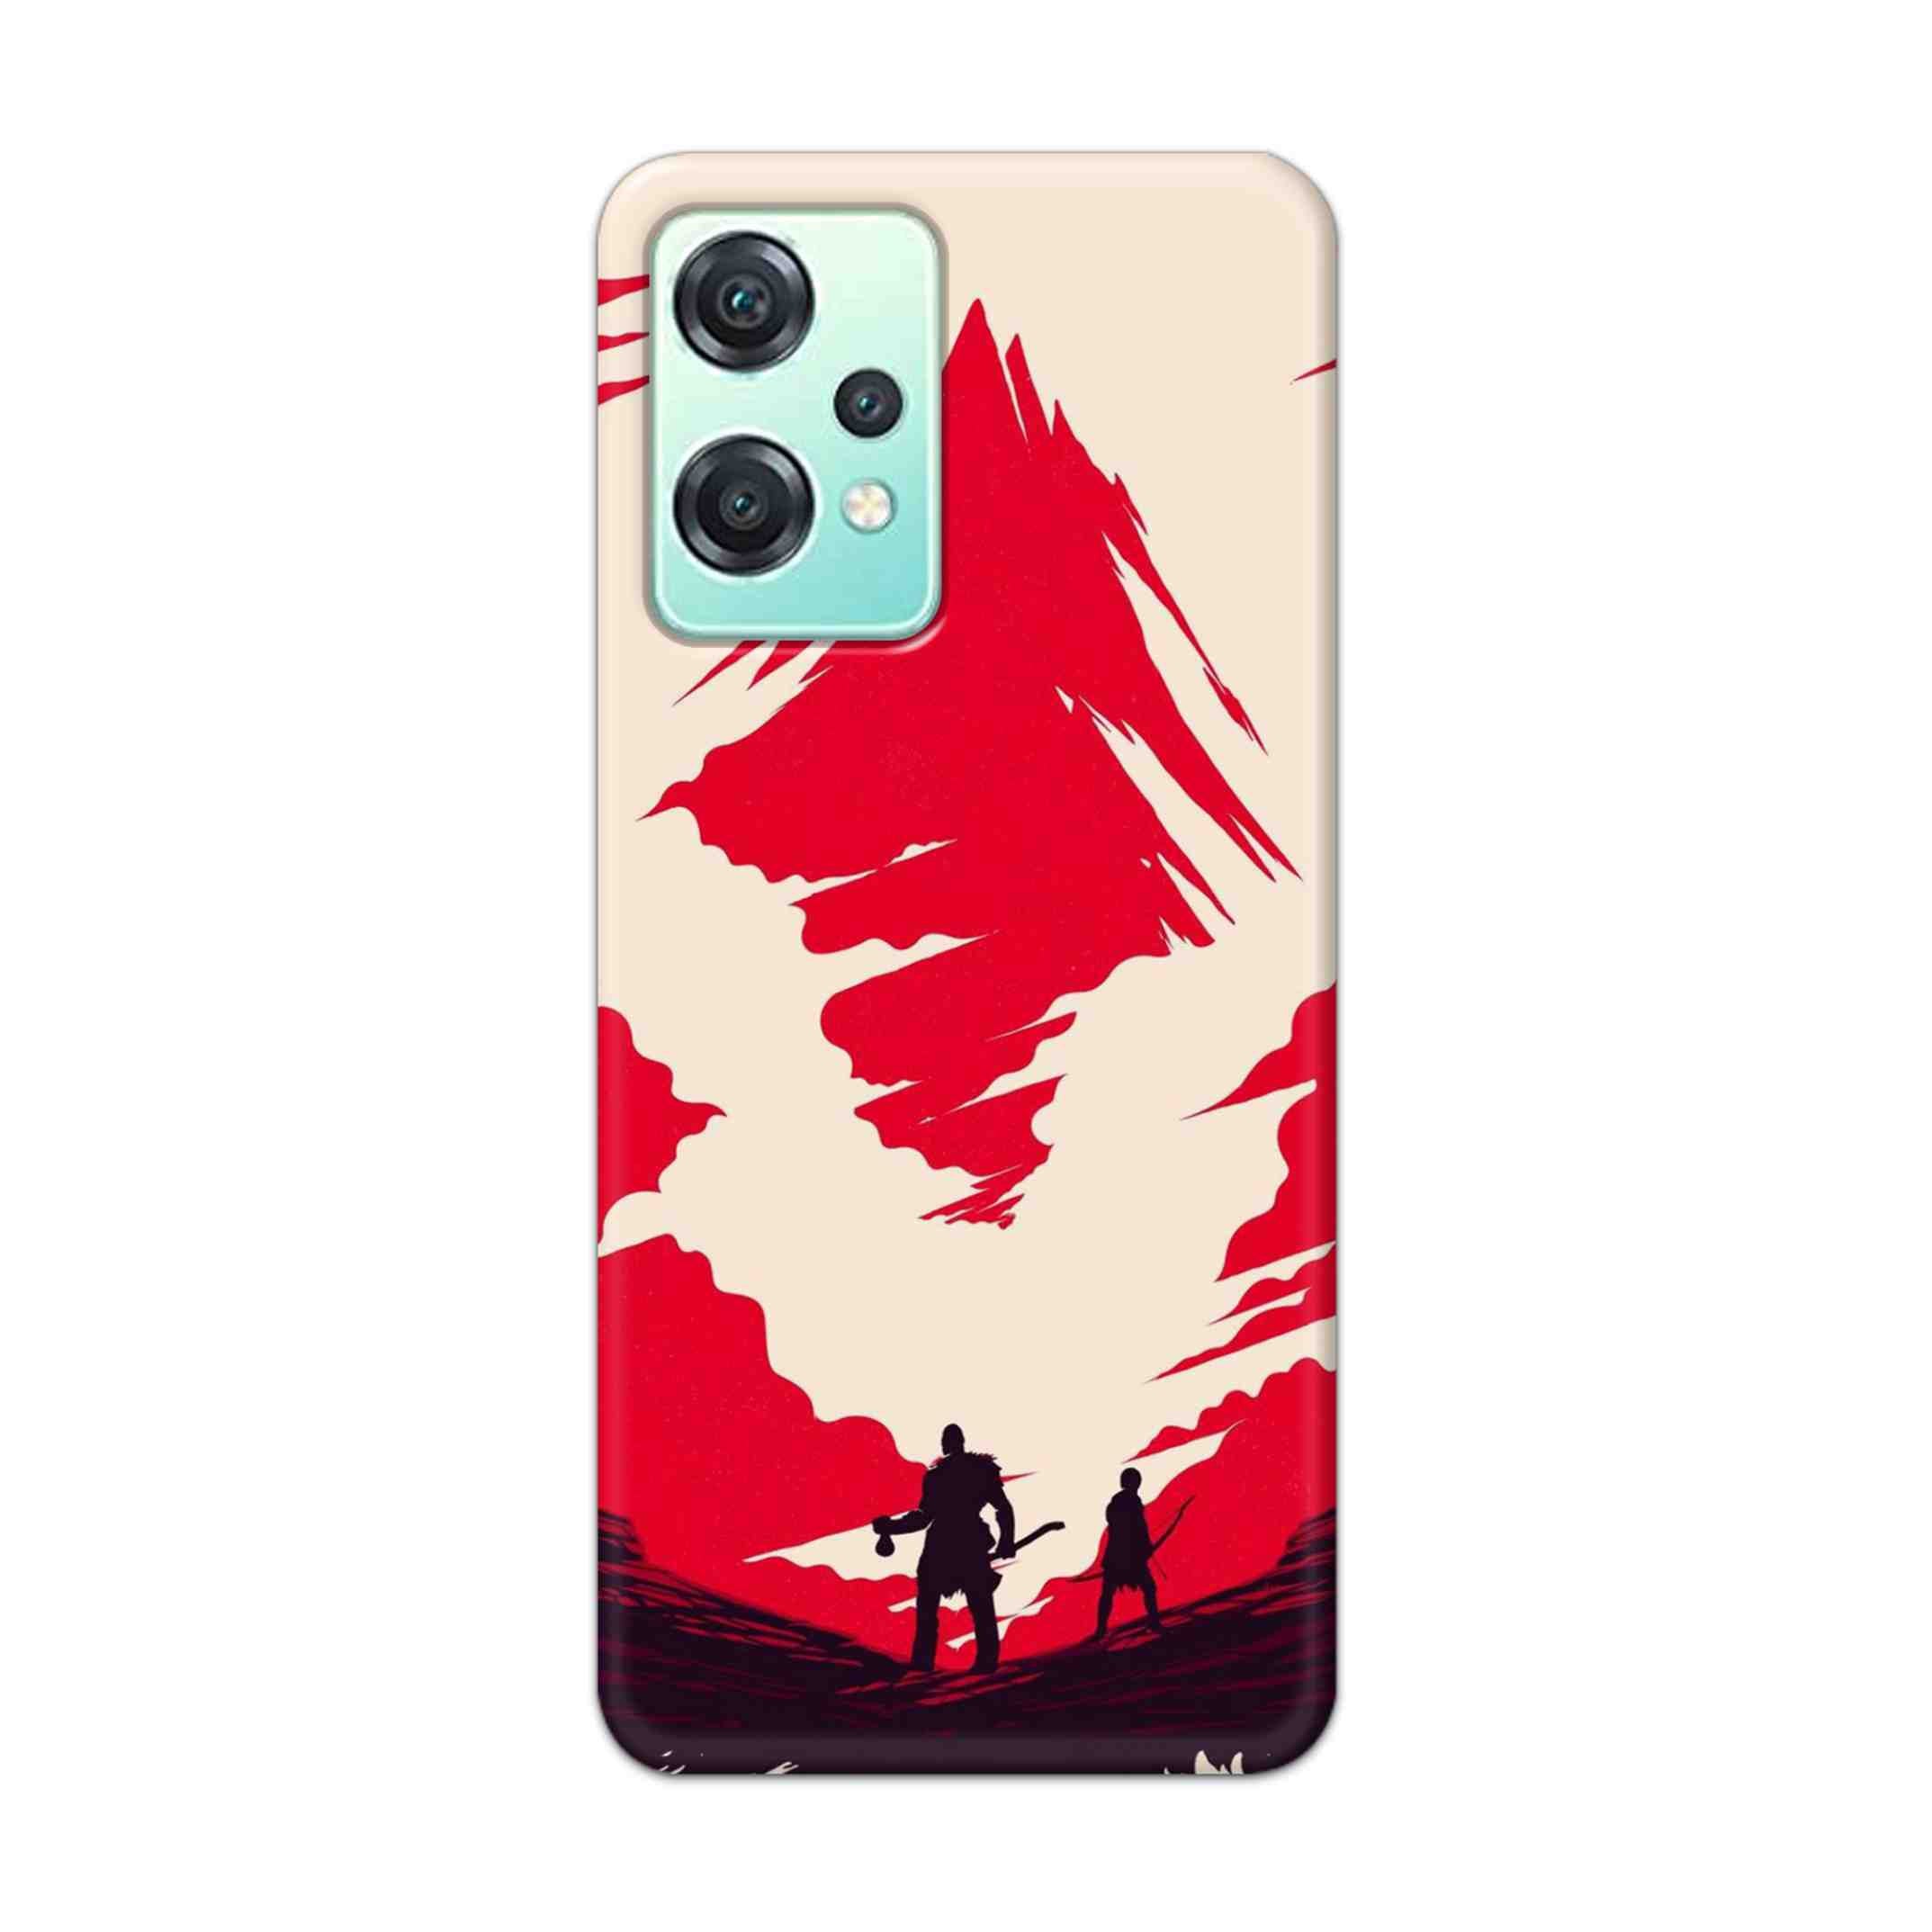 Buy God Of War Art Hard Back Mobile Phone Case Cover For OnePlus Nord CE 2 Lite 5G Online